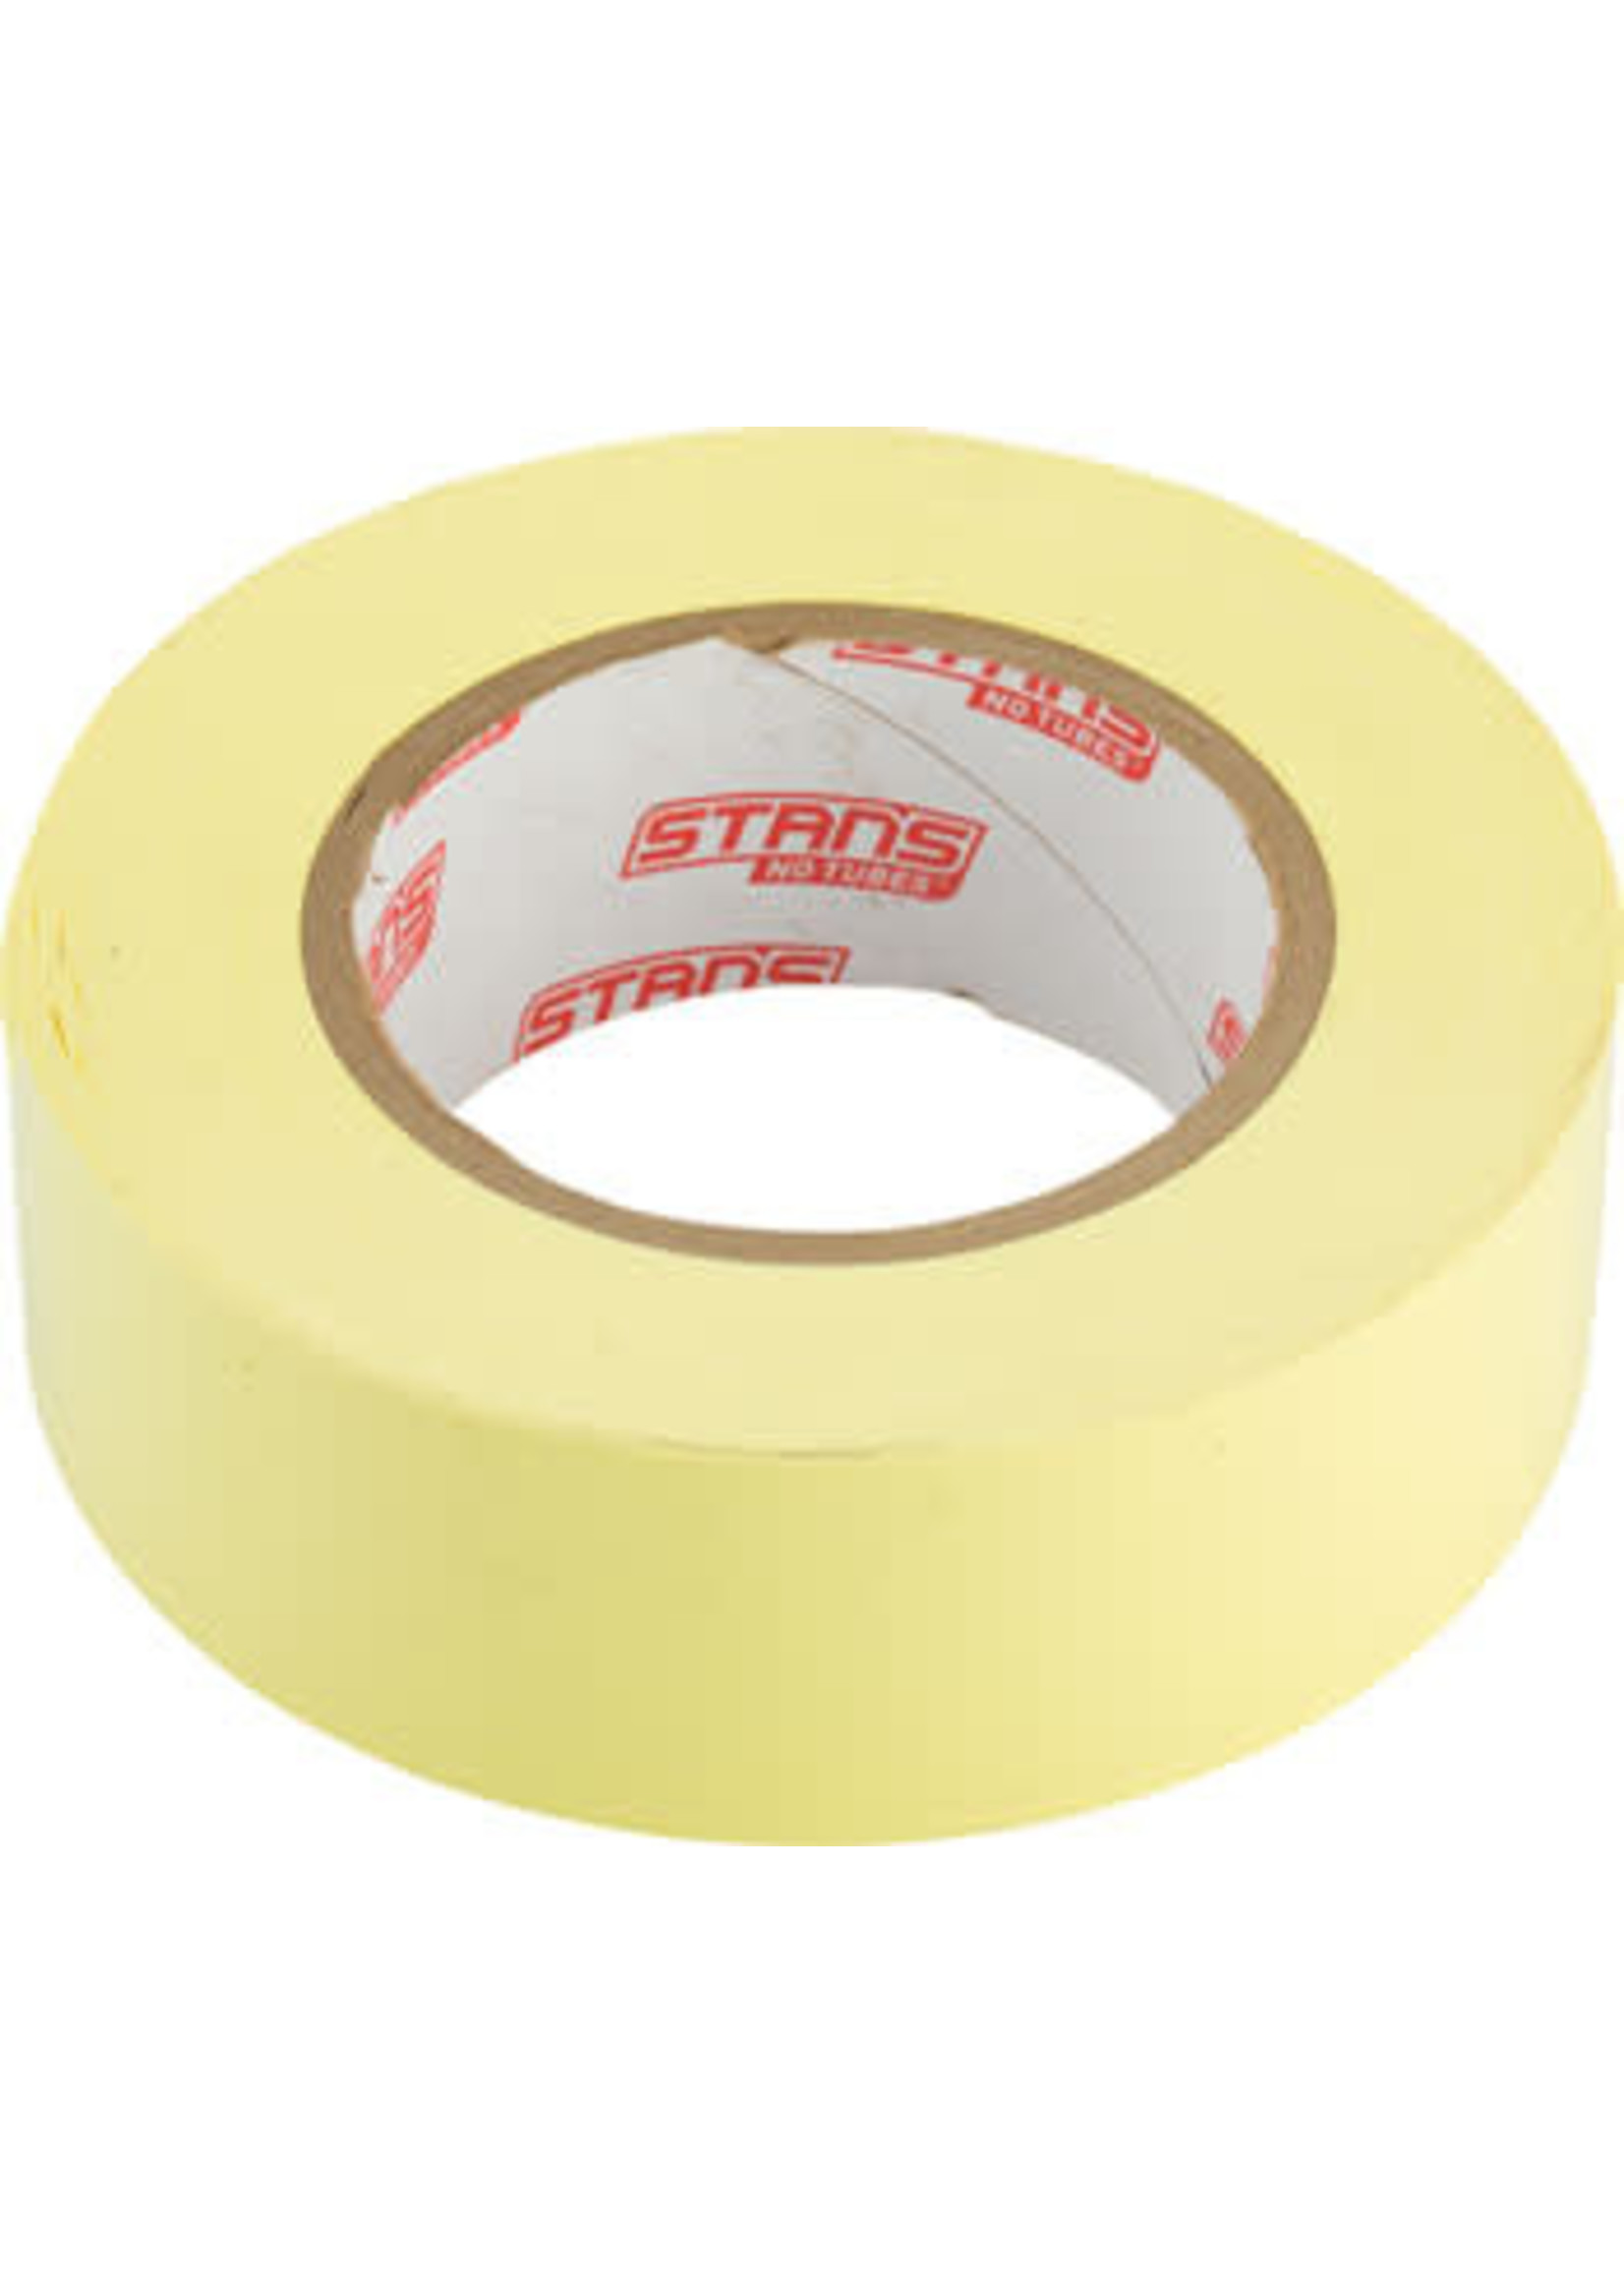 Stan's No-Tubes Stan's NoTubes Rim Tape: 36mm x 60 yard roll